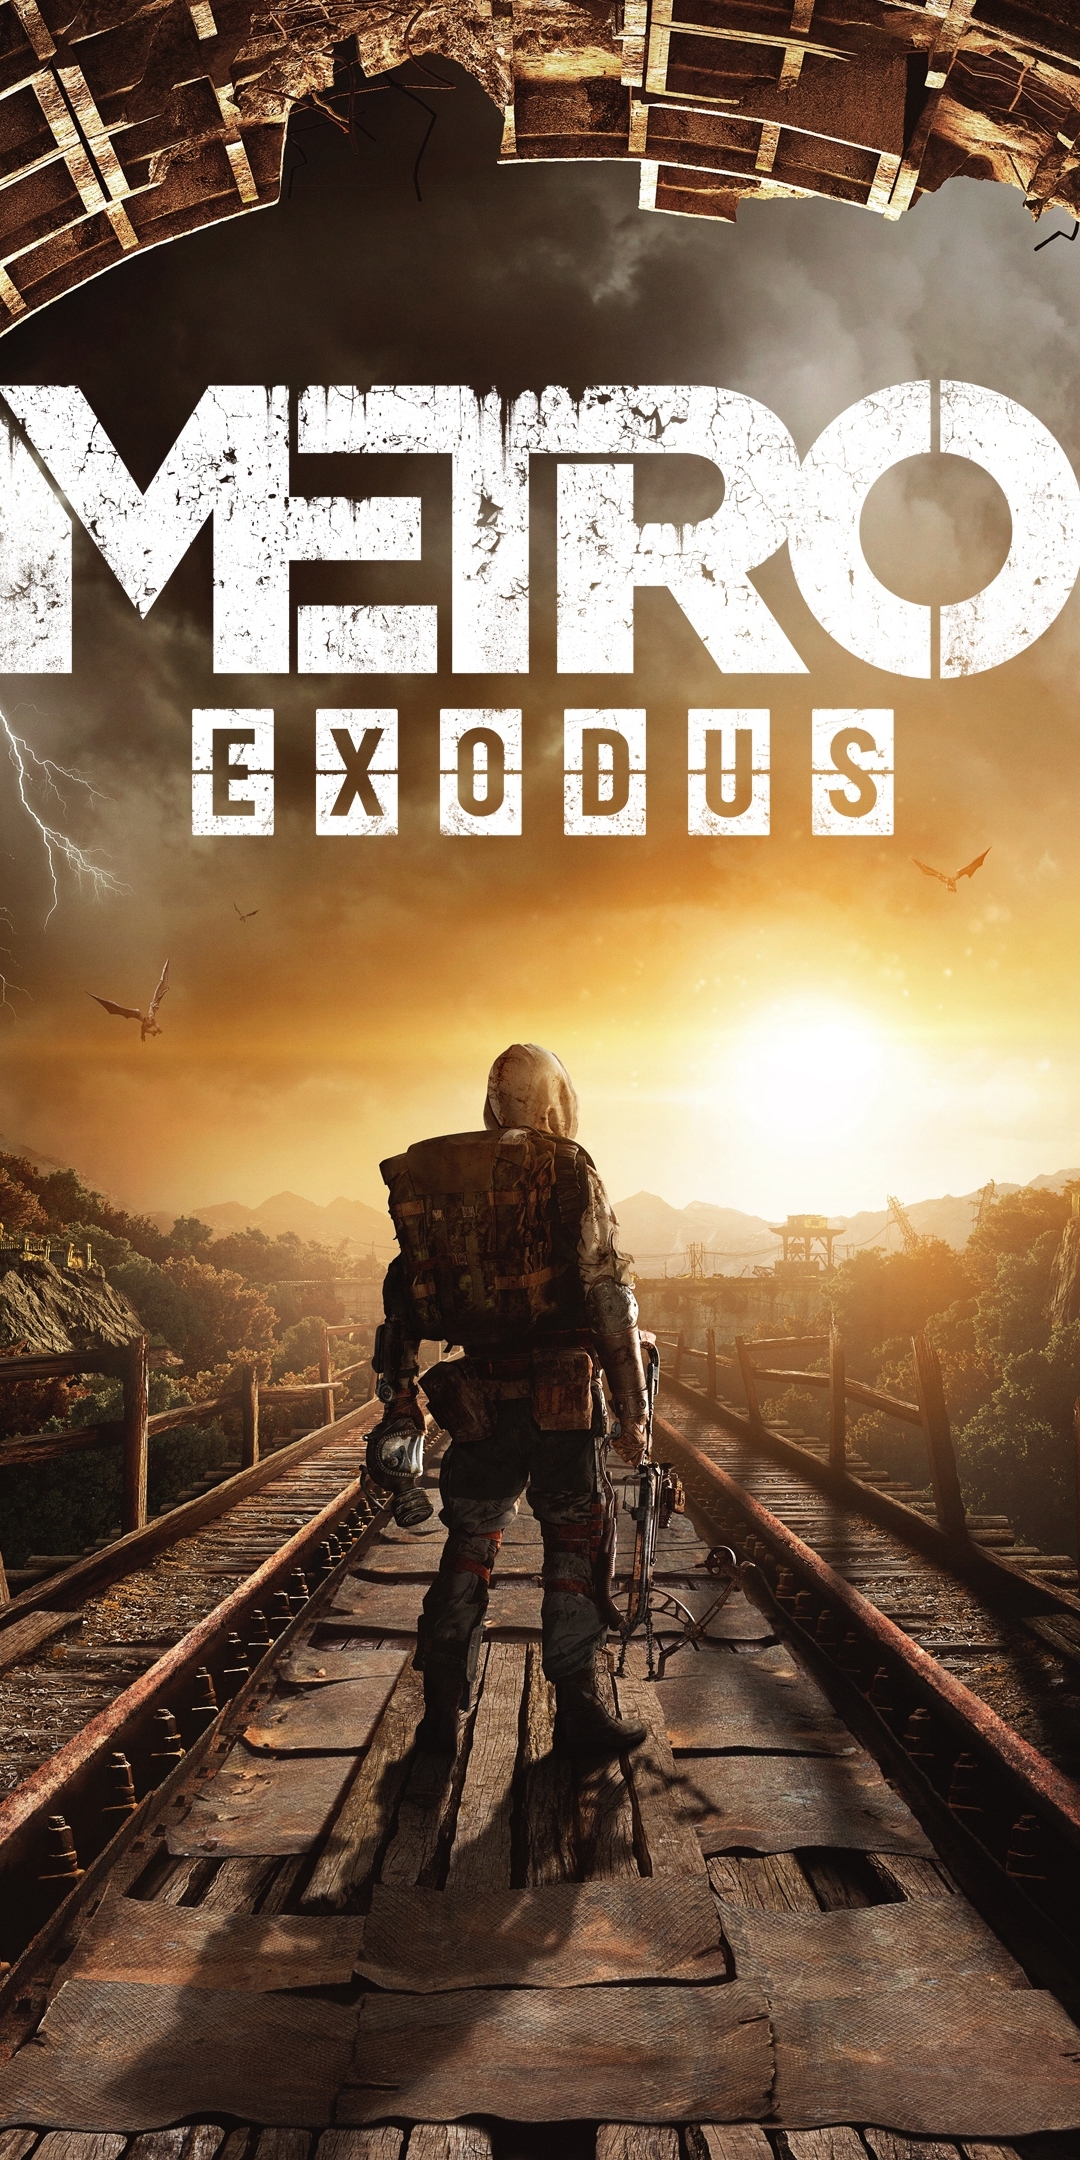 Baixar papel de parede para celular de Metrô, Videogame, Metro Exodus gratuito.